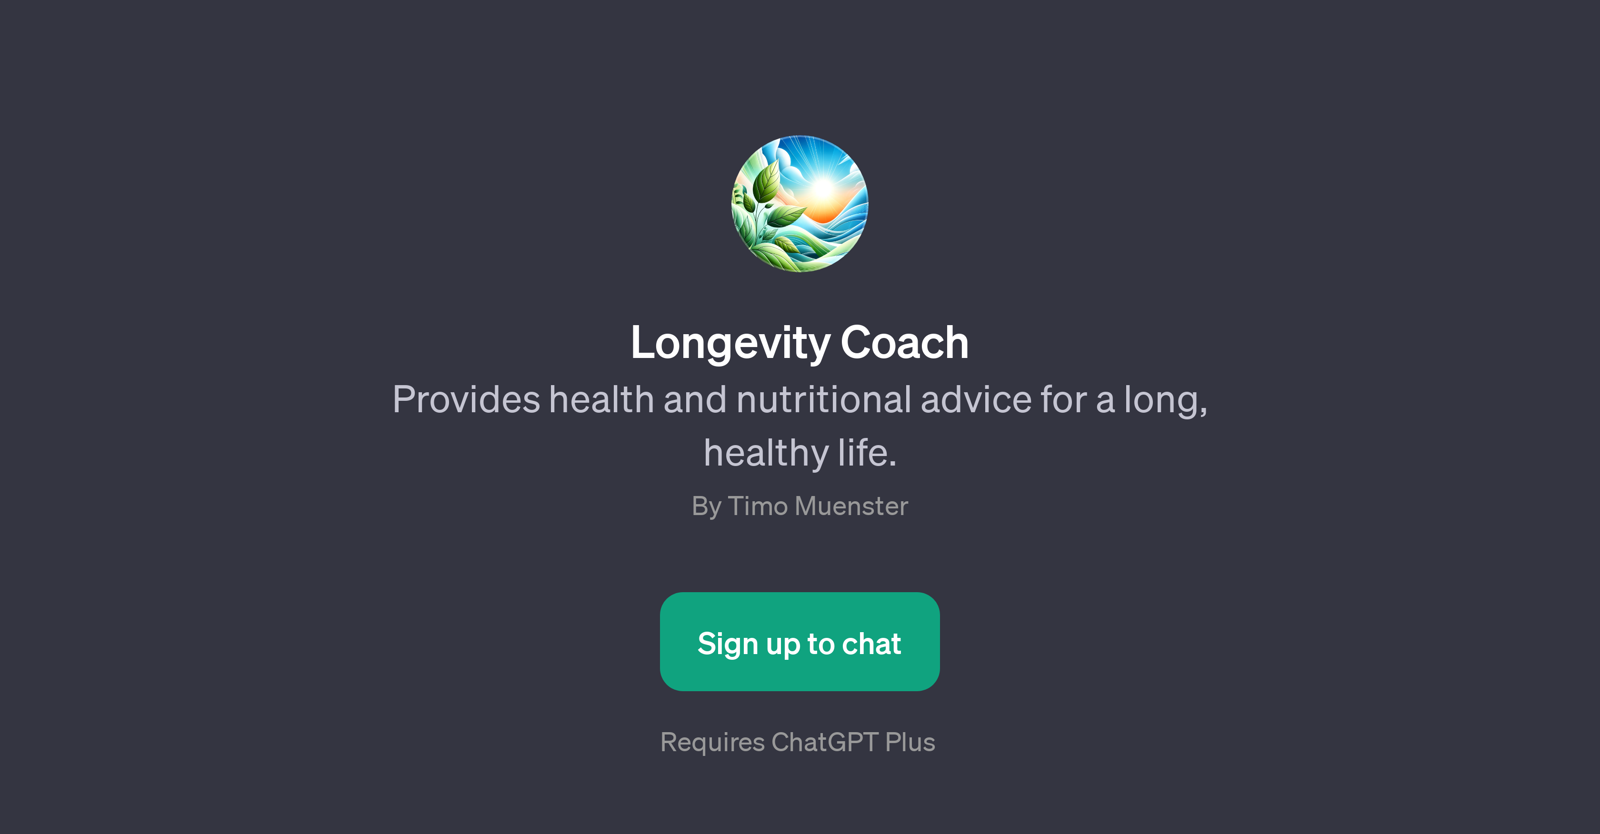 Longevity Coach website